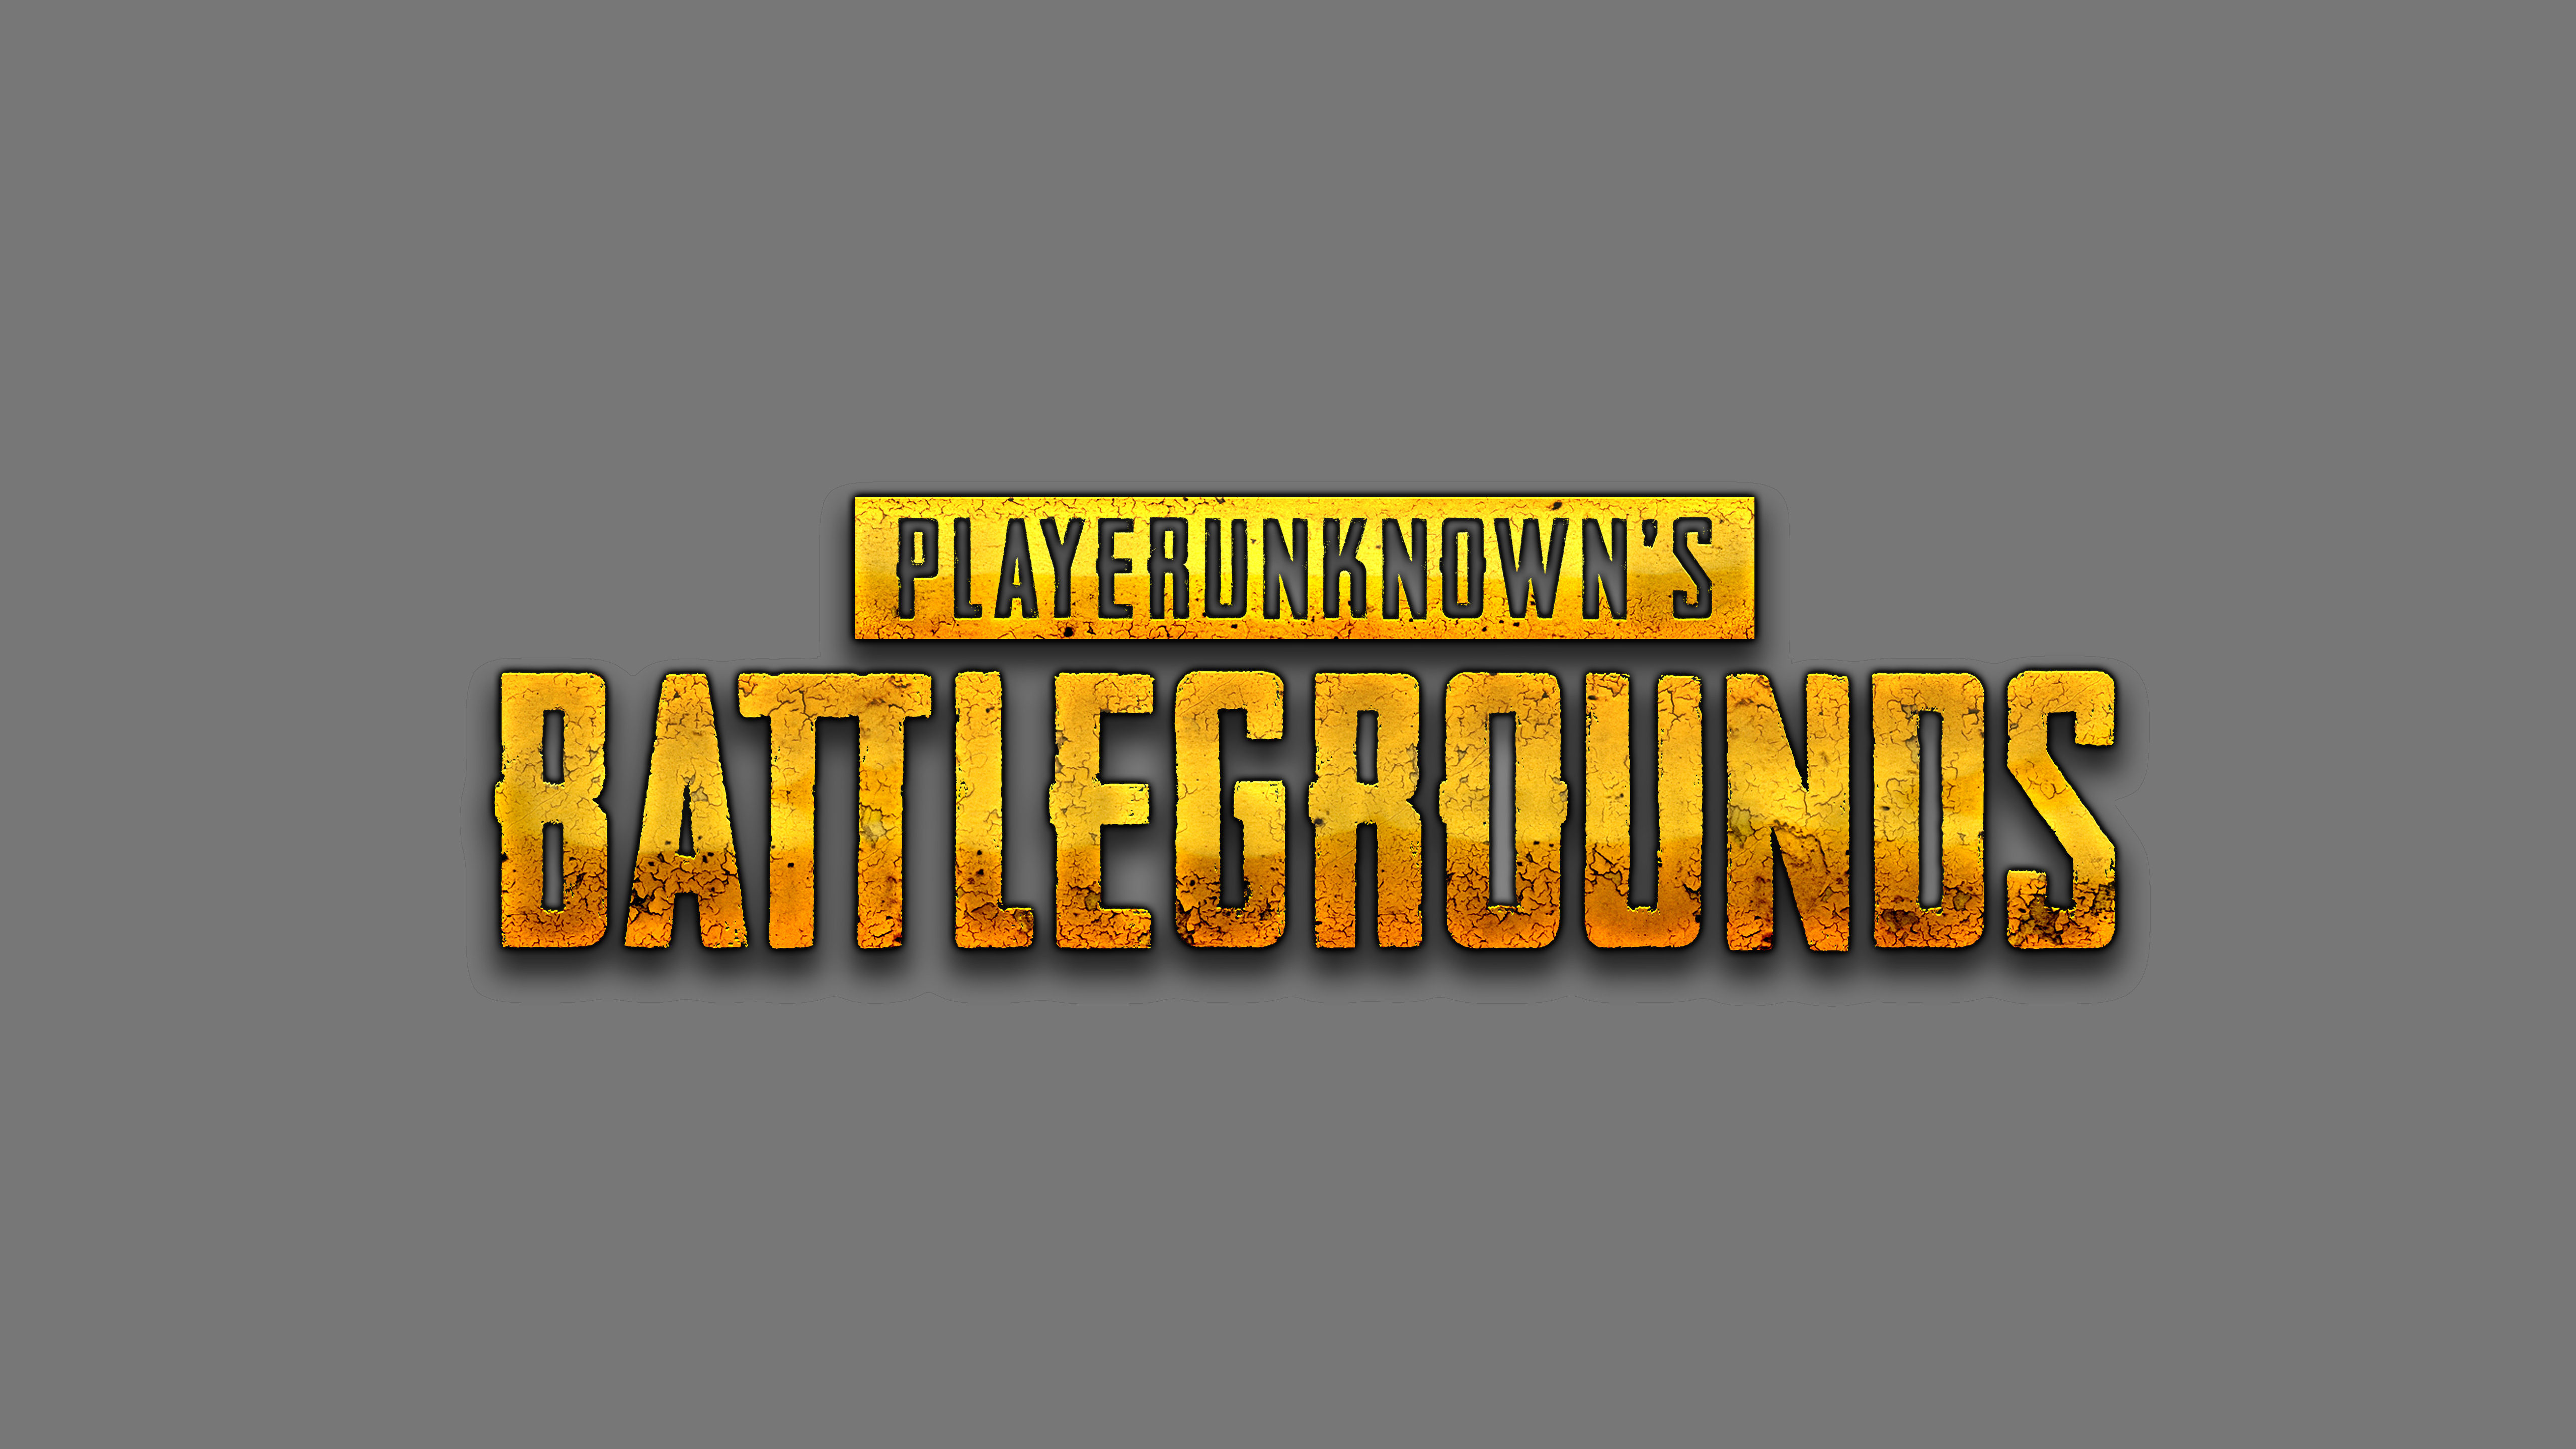 Playerunknowns Battlegrounds game logo on gray background